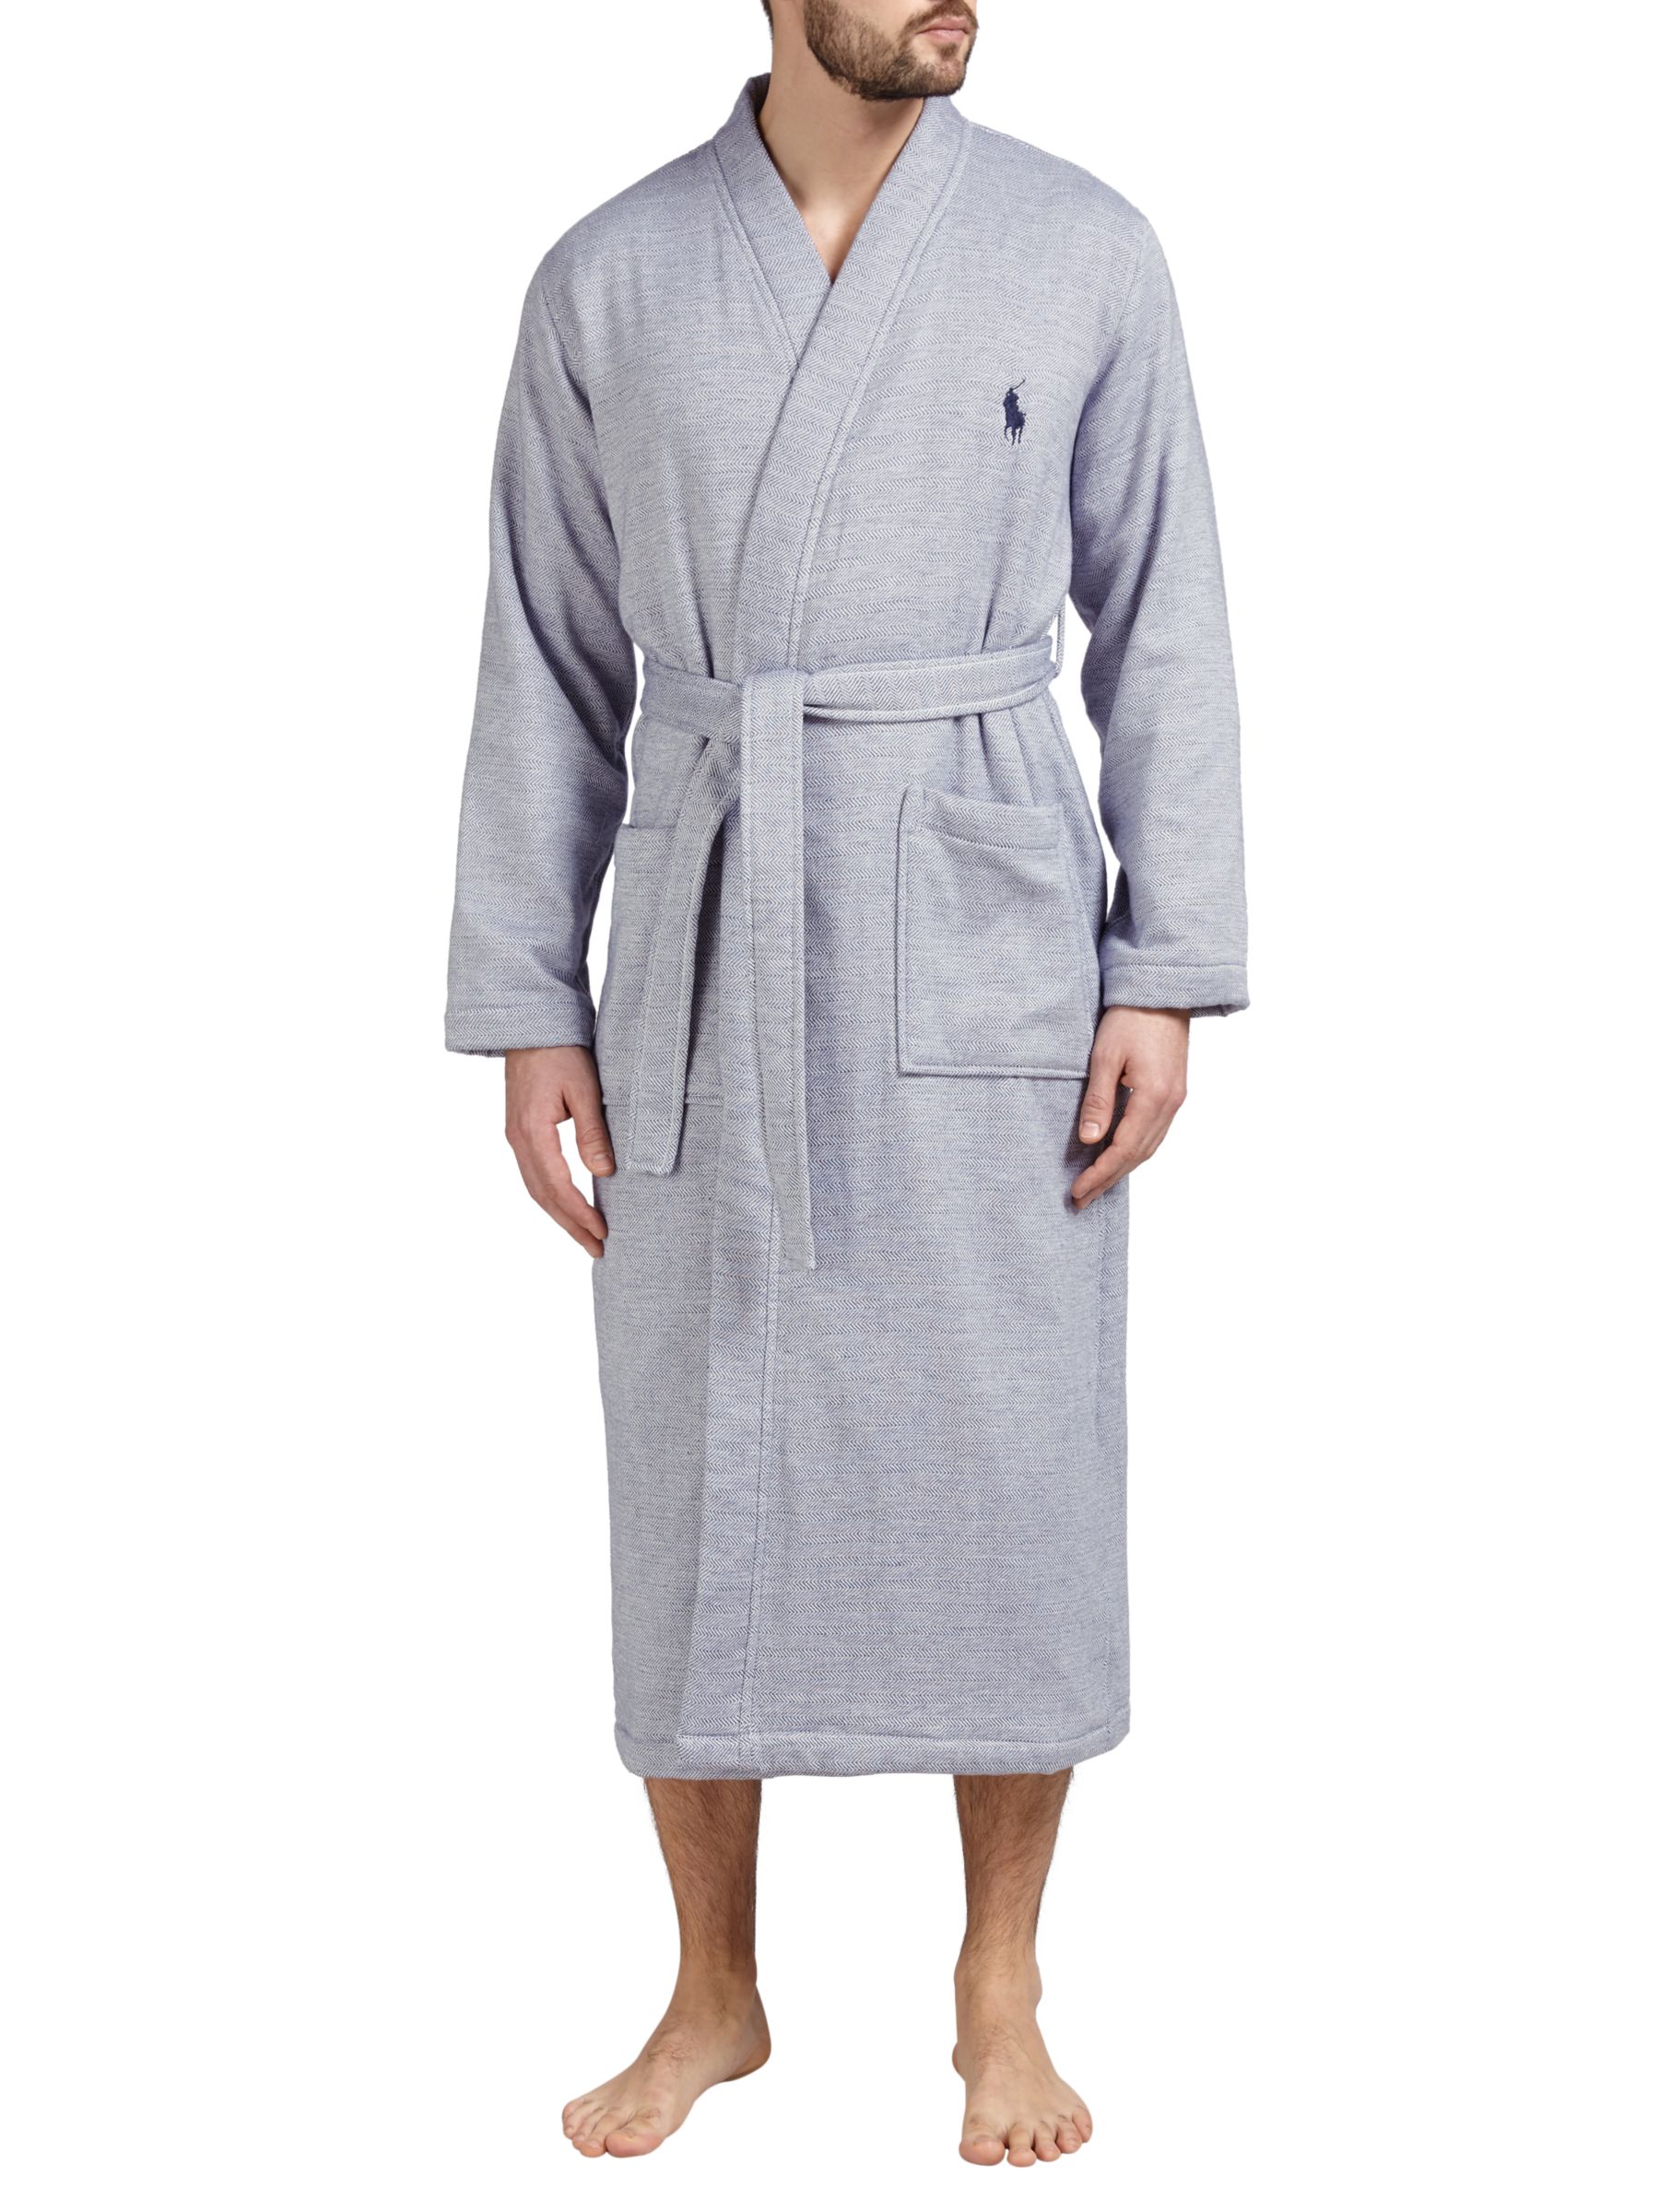 Polo Ralph Lauren Herringbone Cotton Robe, Navy at John Lewis & Partners